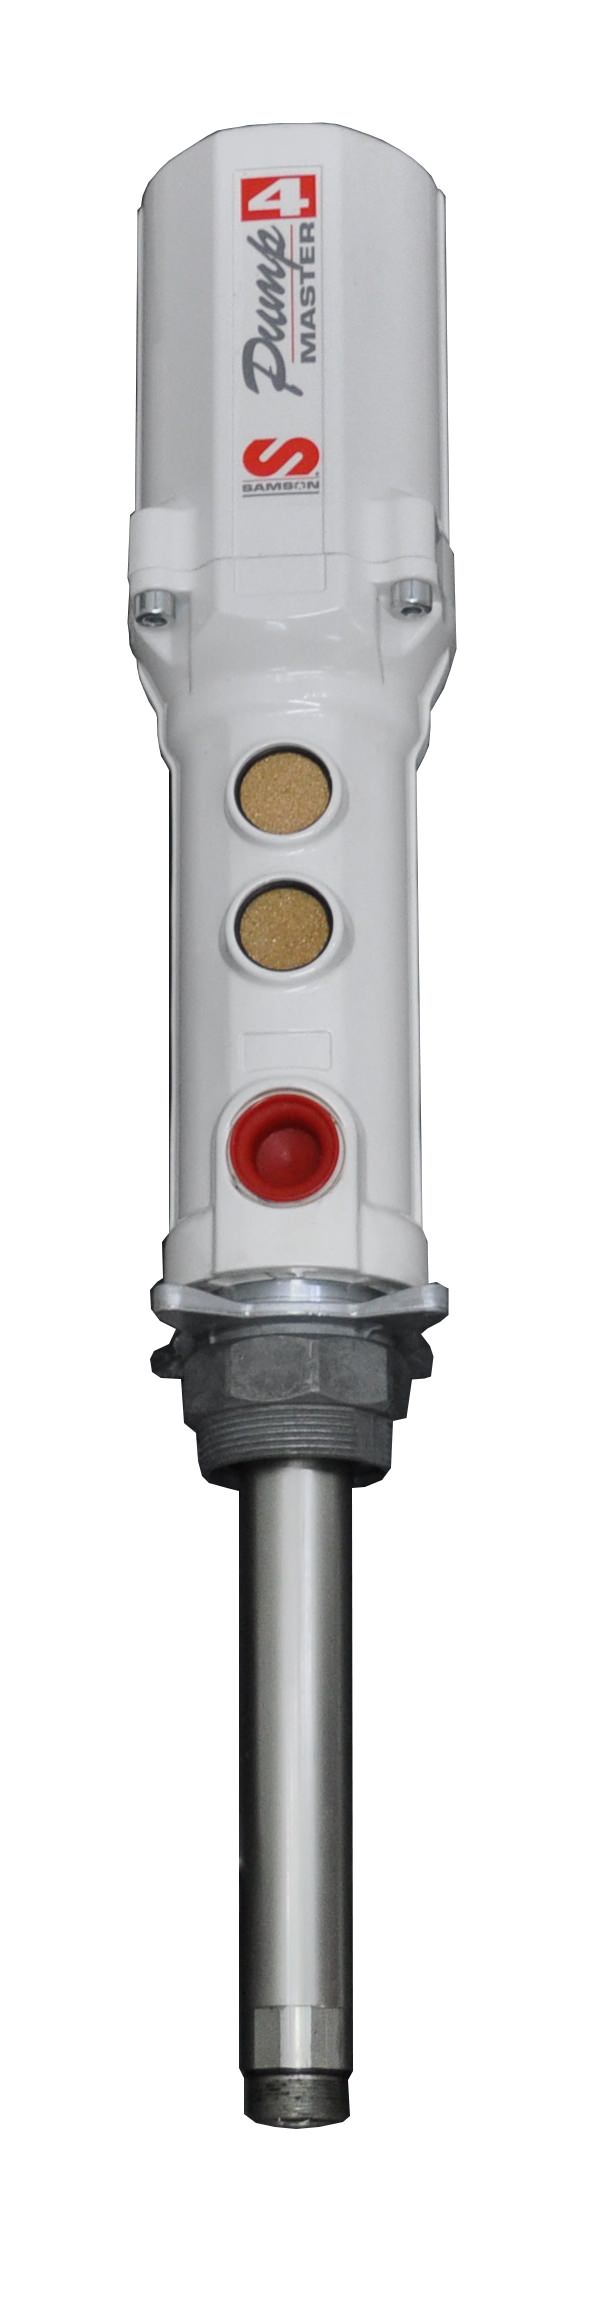 PumpMaster 4 5:1 (55 Gal.) Air Operated Oil Pump Image